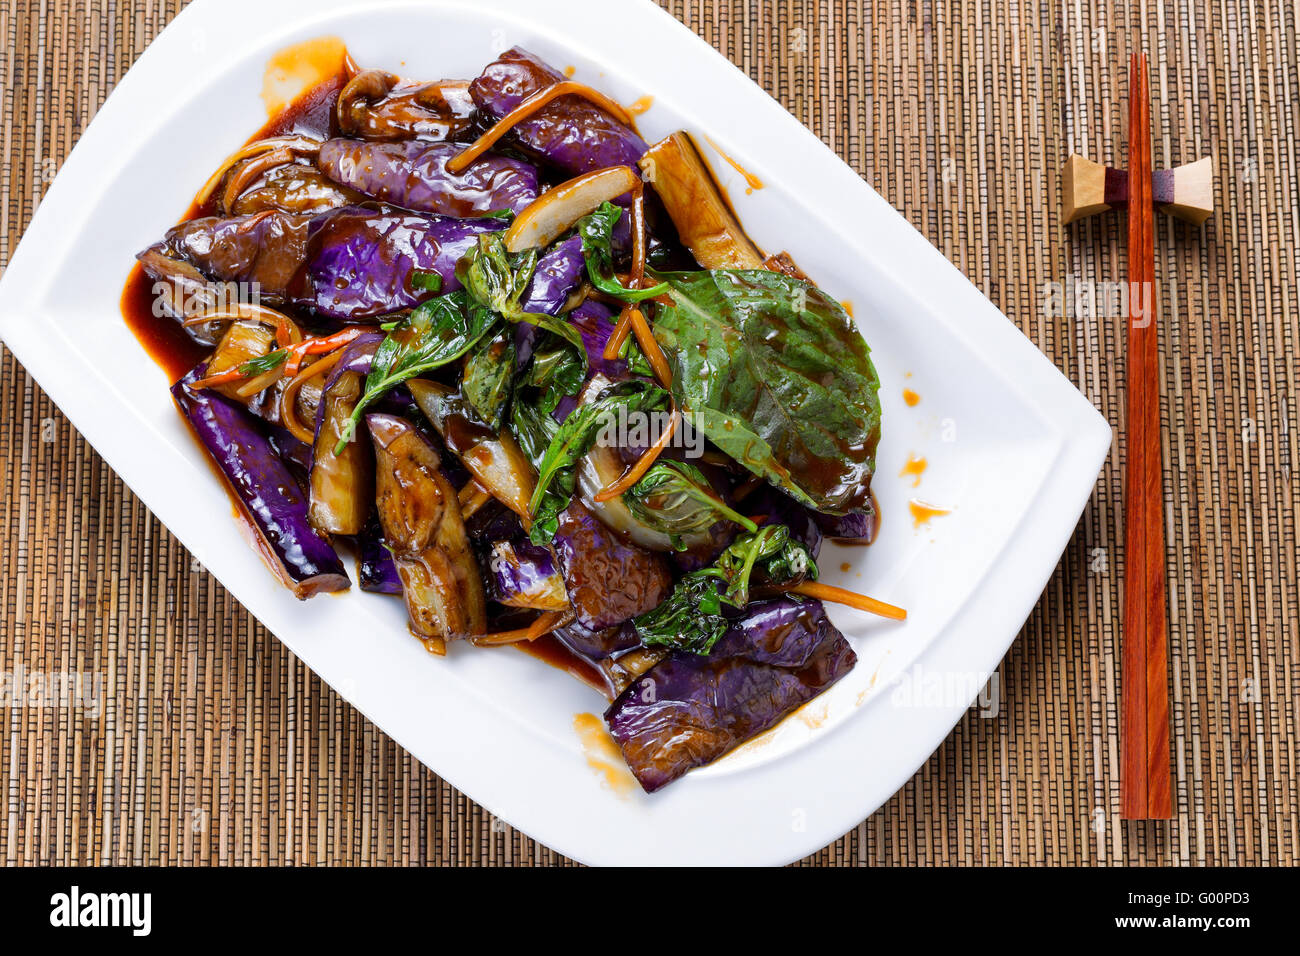 Prepared juicy eggplant and basil herb dish Stock Photo